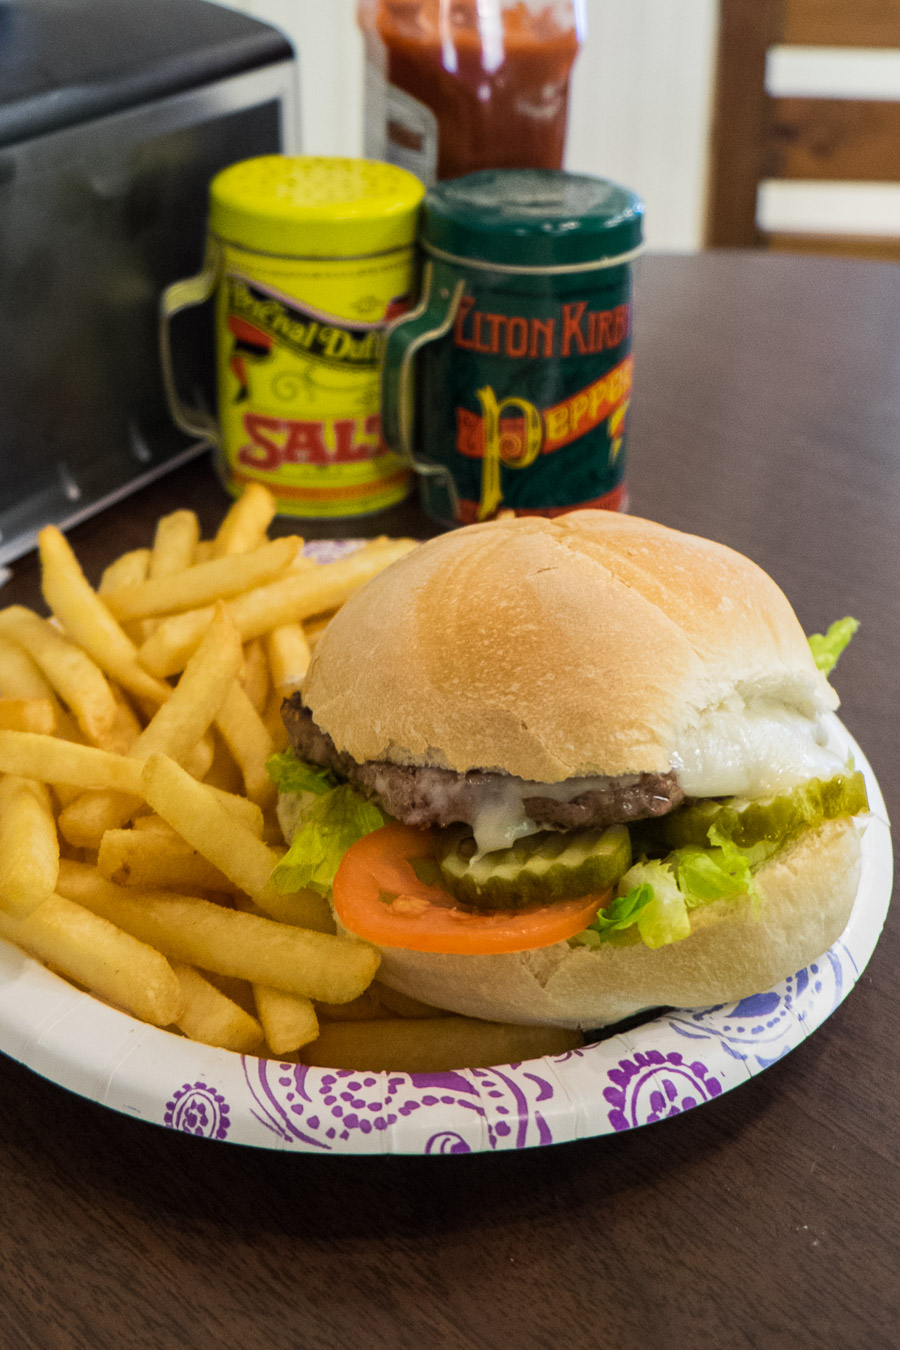 Cheeseburger and fries at Peter's Cafe.